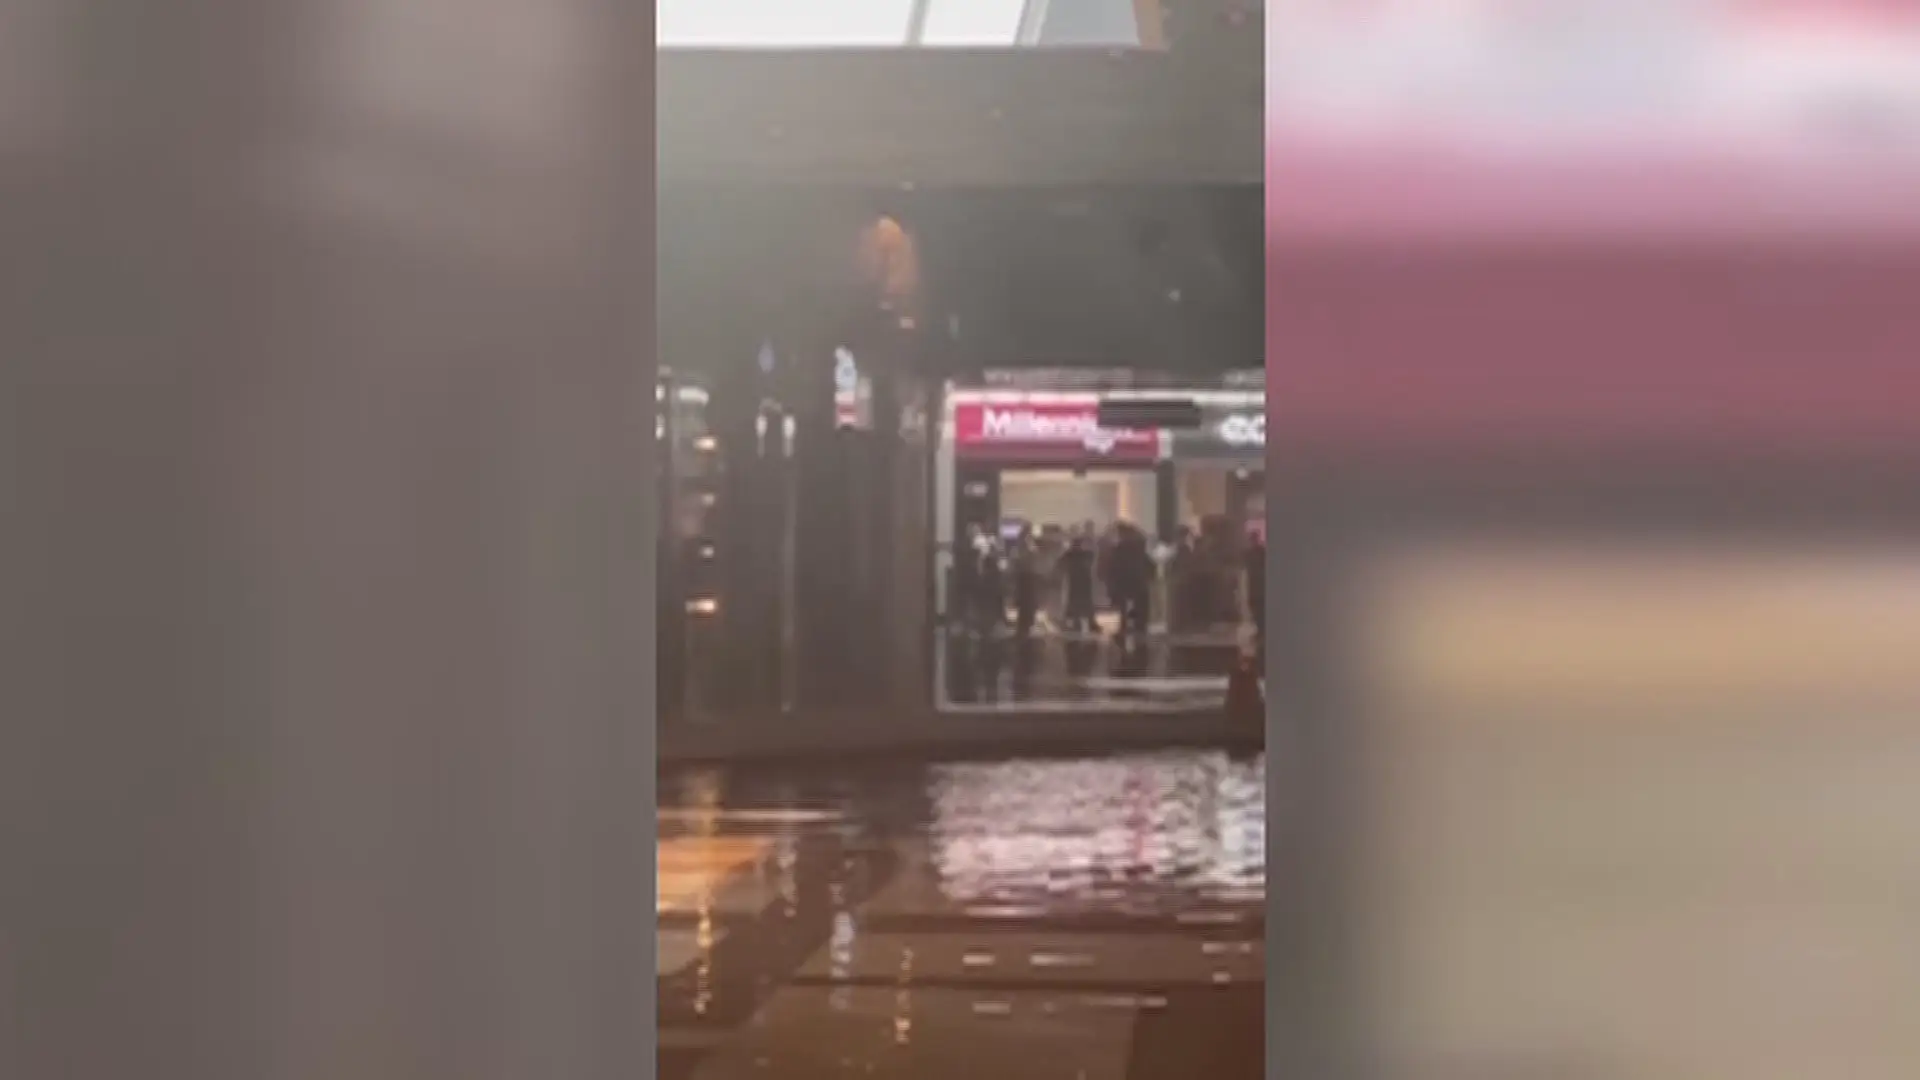 Parte do centro comercial Amoreiras inundada devido a rebentamento de conduta de água